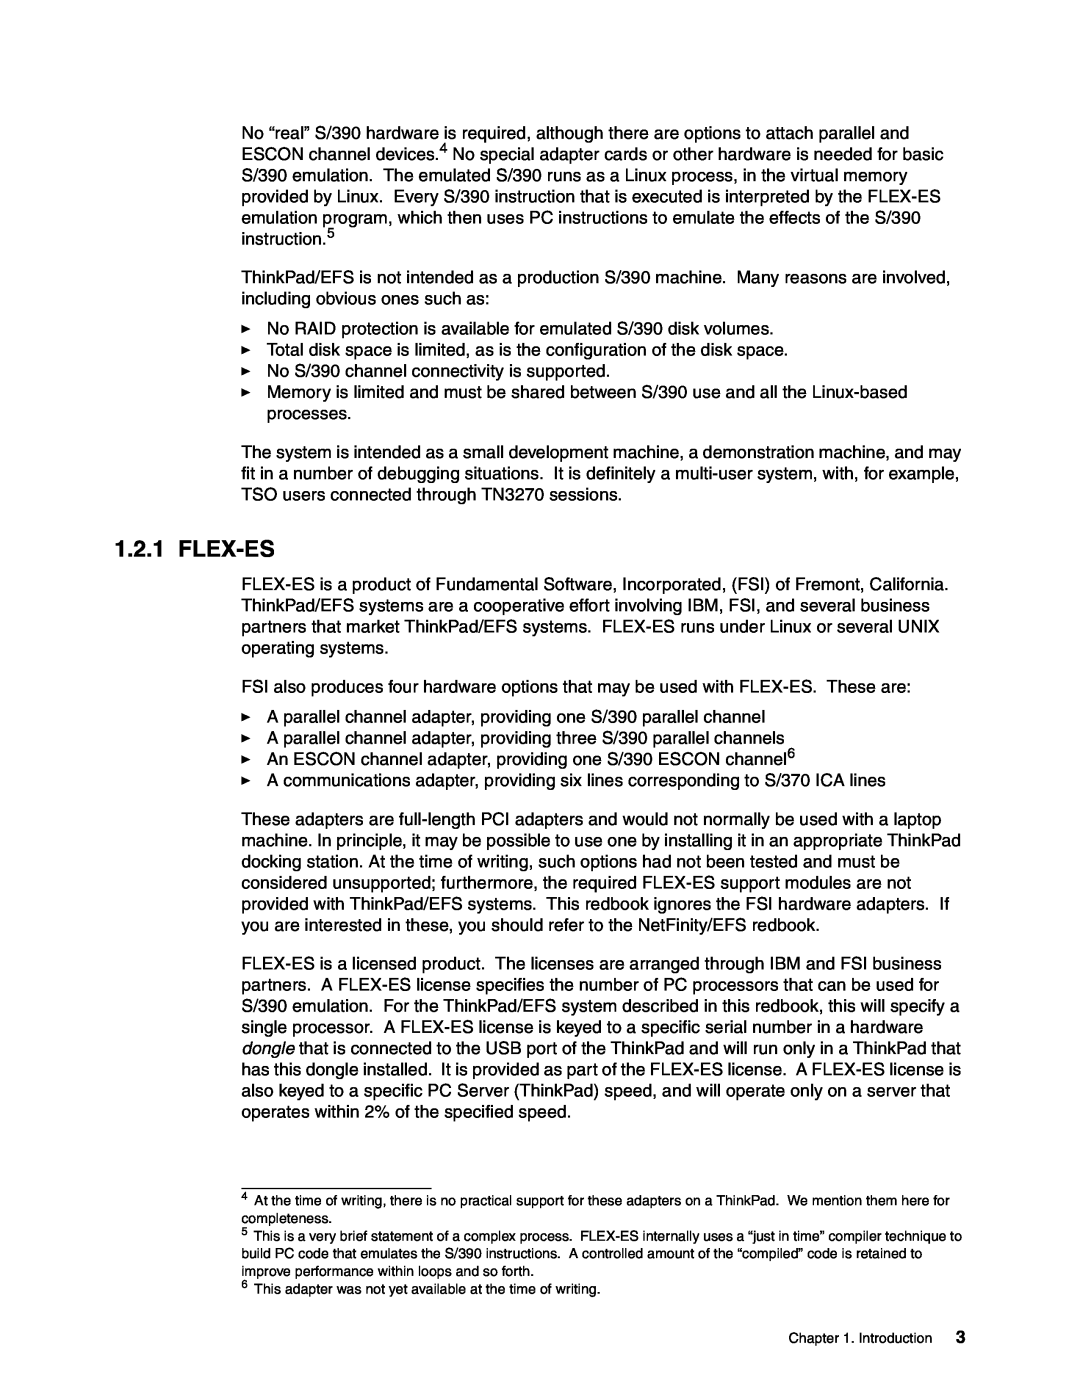 IBM s/390 manual Flex-Es 